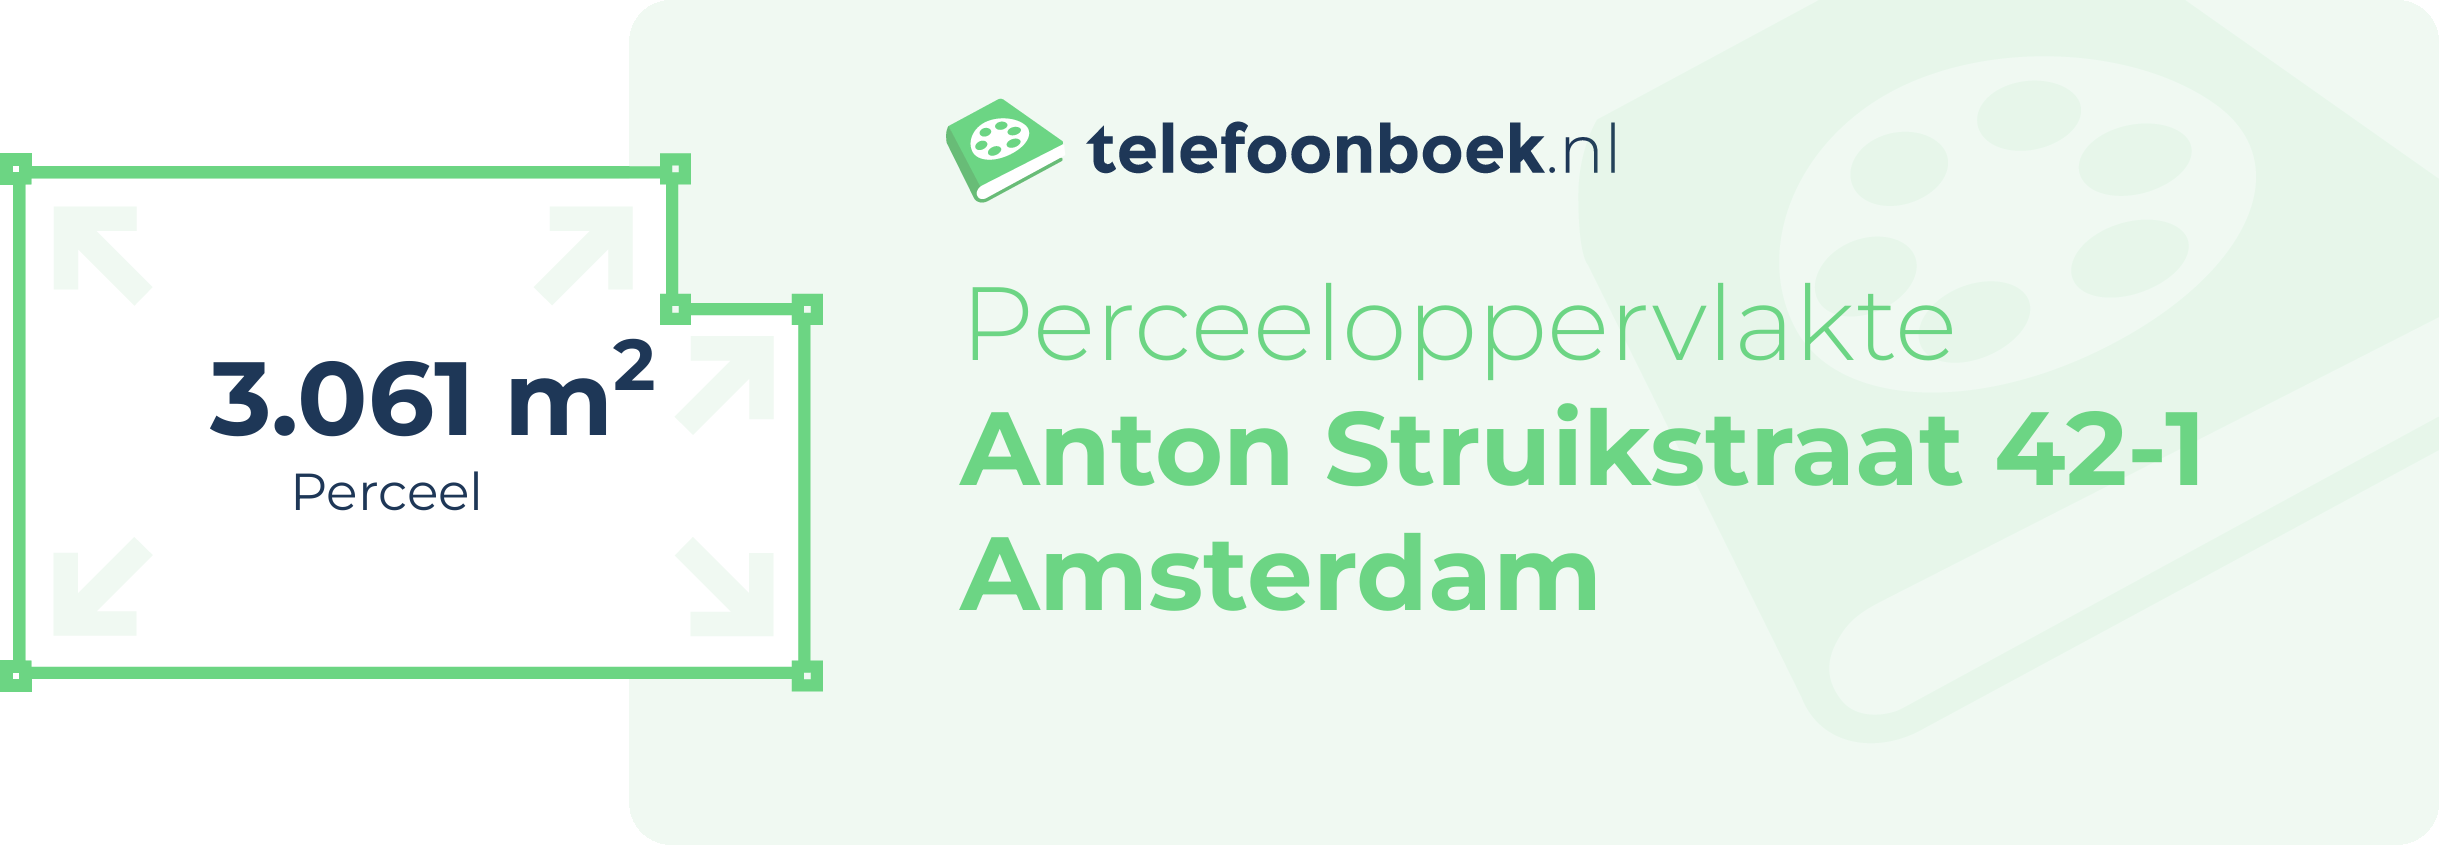 Perceeloppervlakte Anton Struikstraat 42-1 Amsterdam